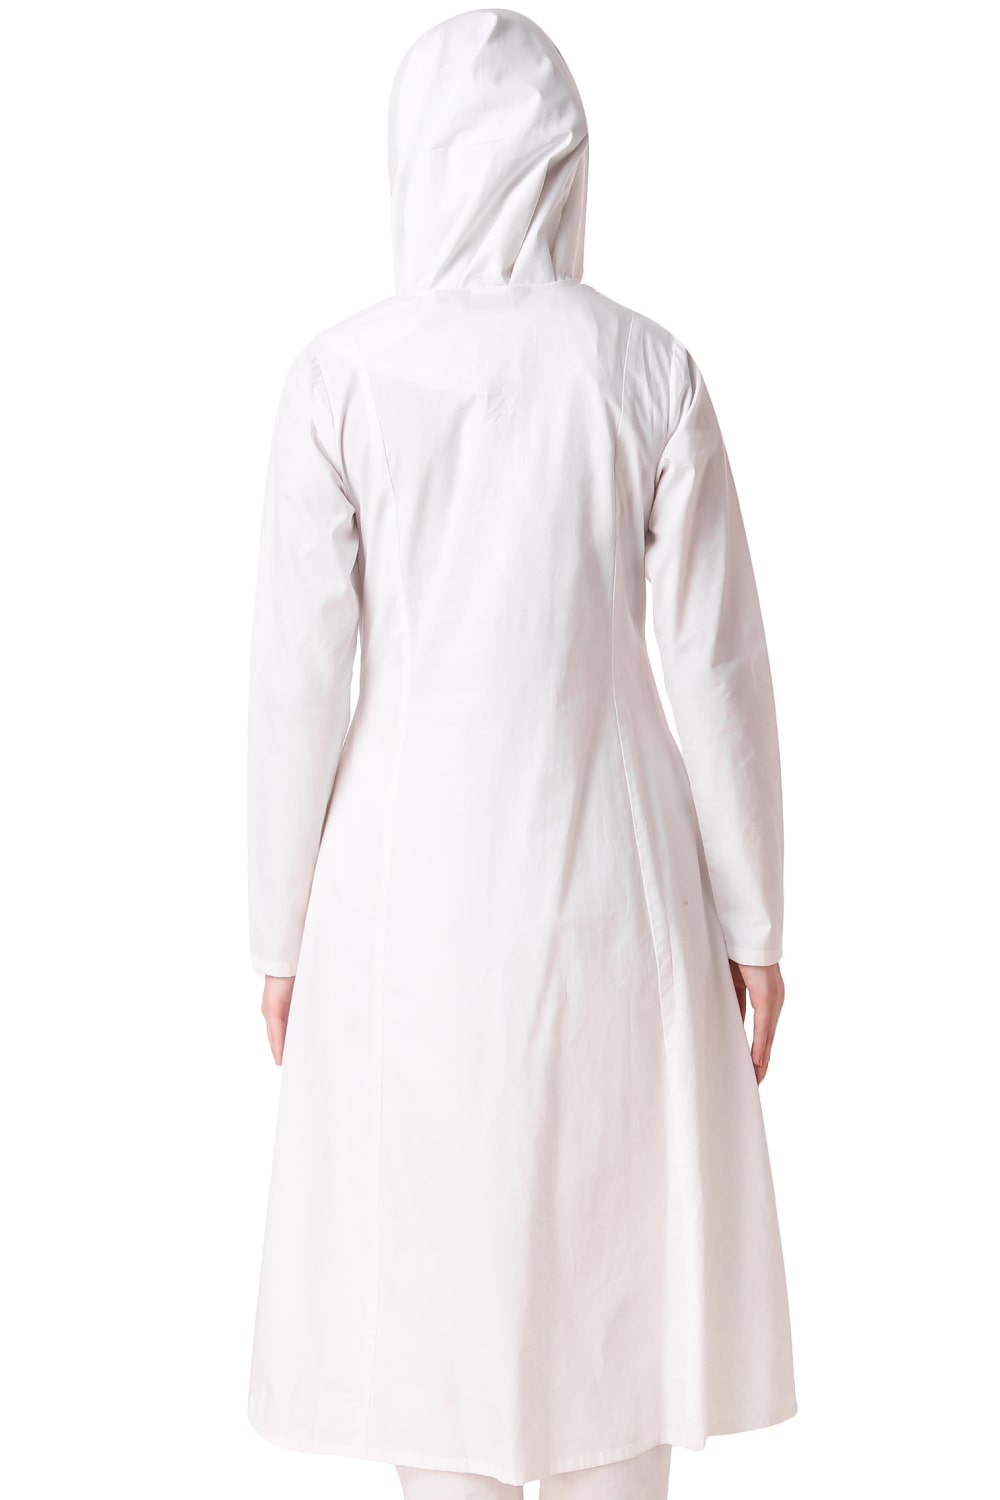 Zuhera Prayer Tunic